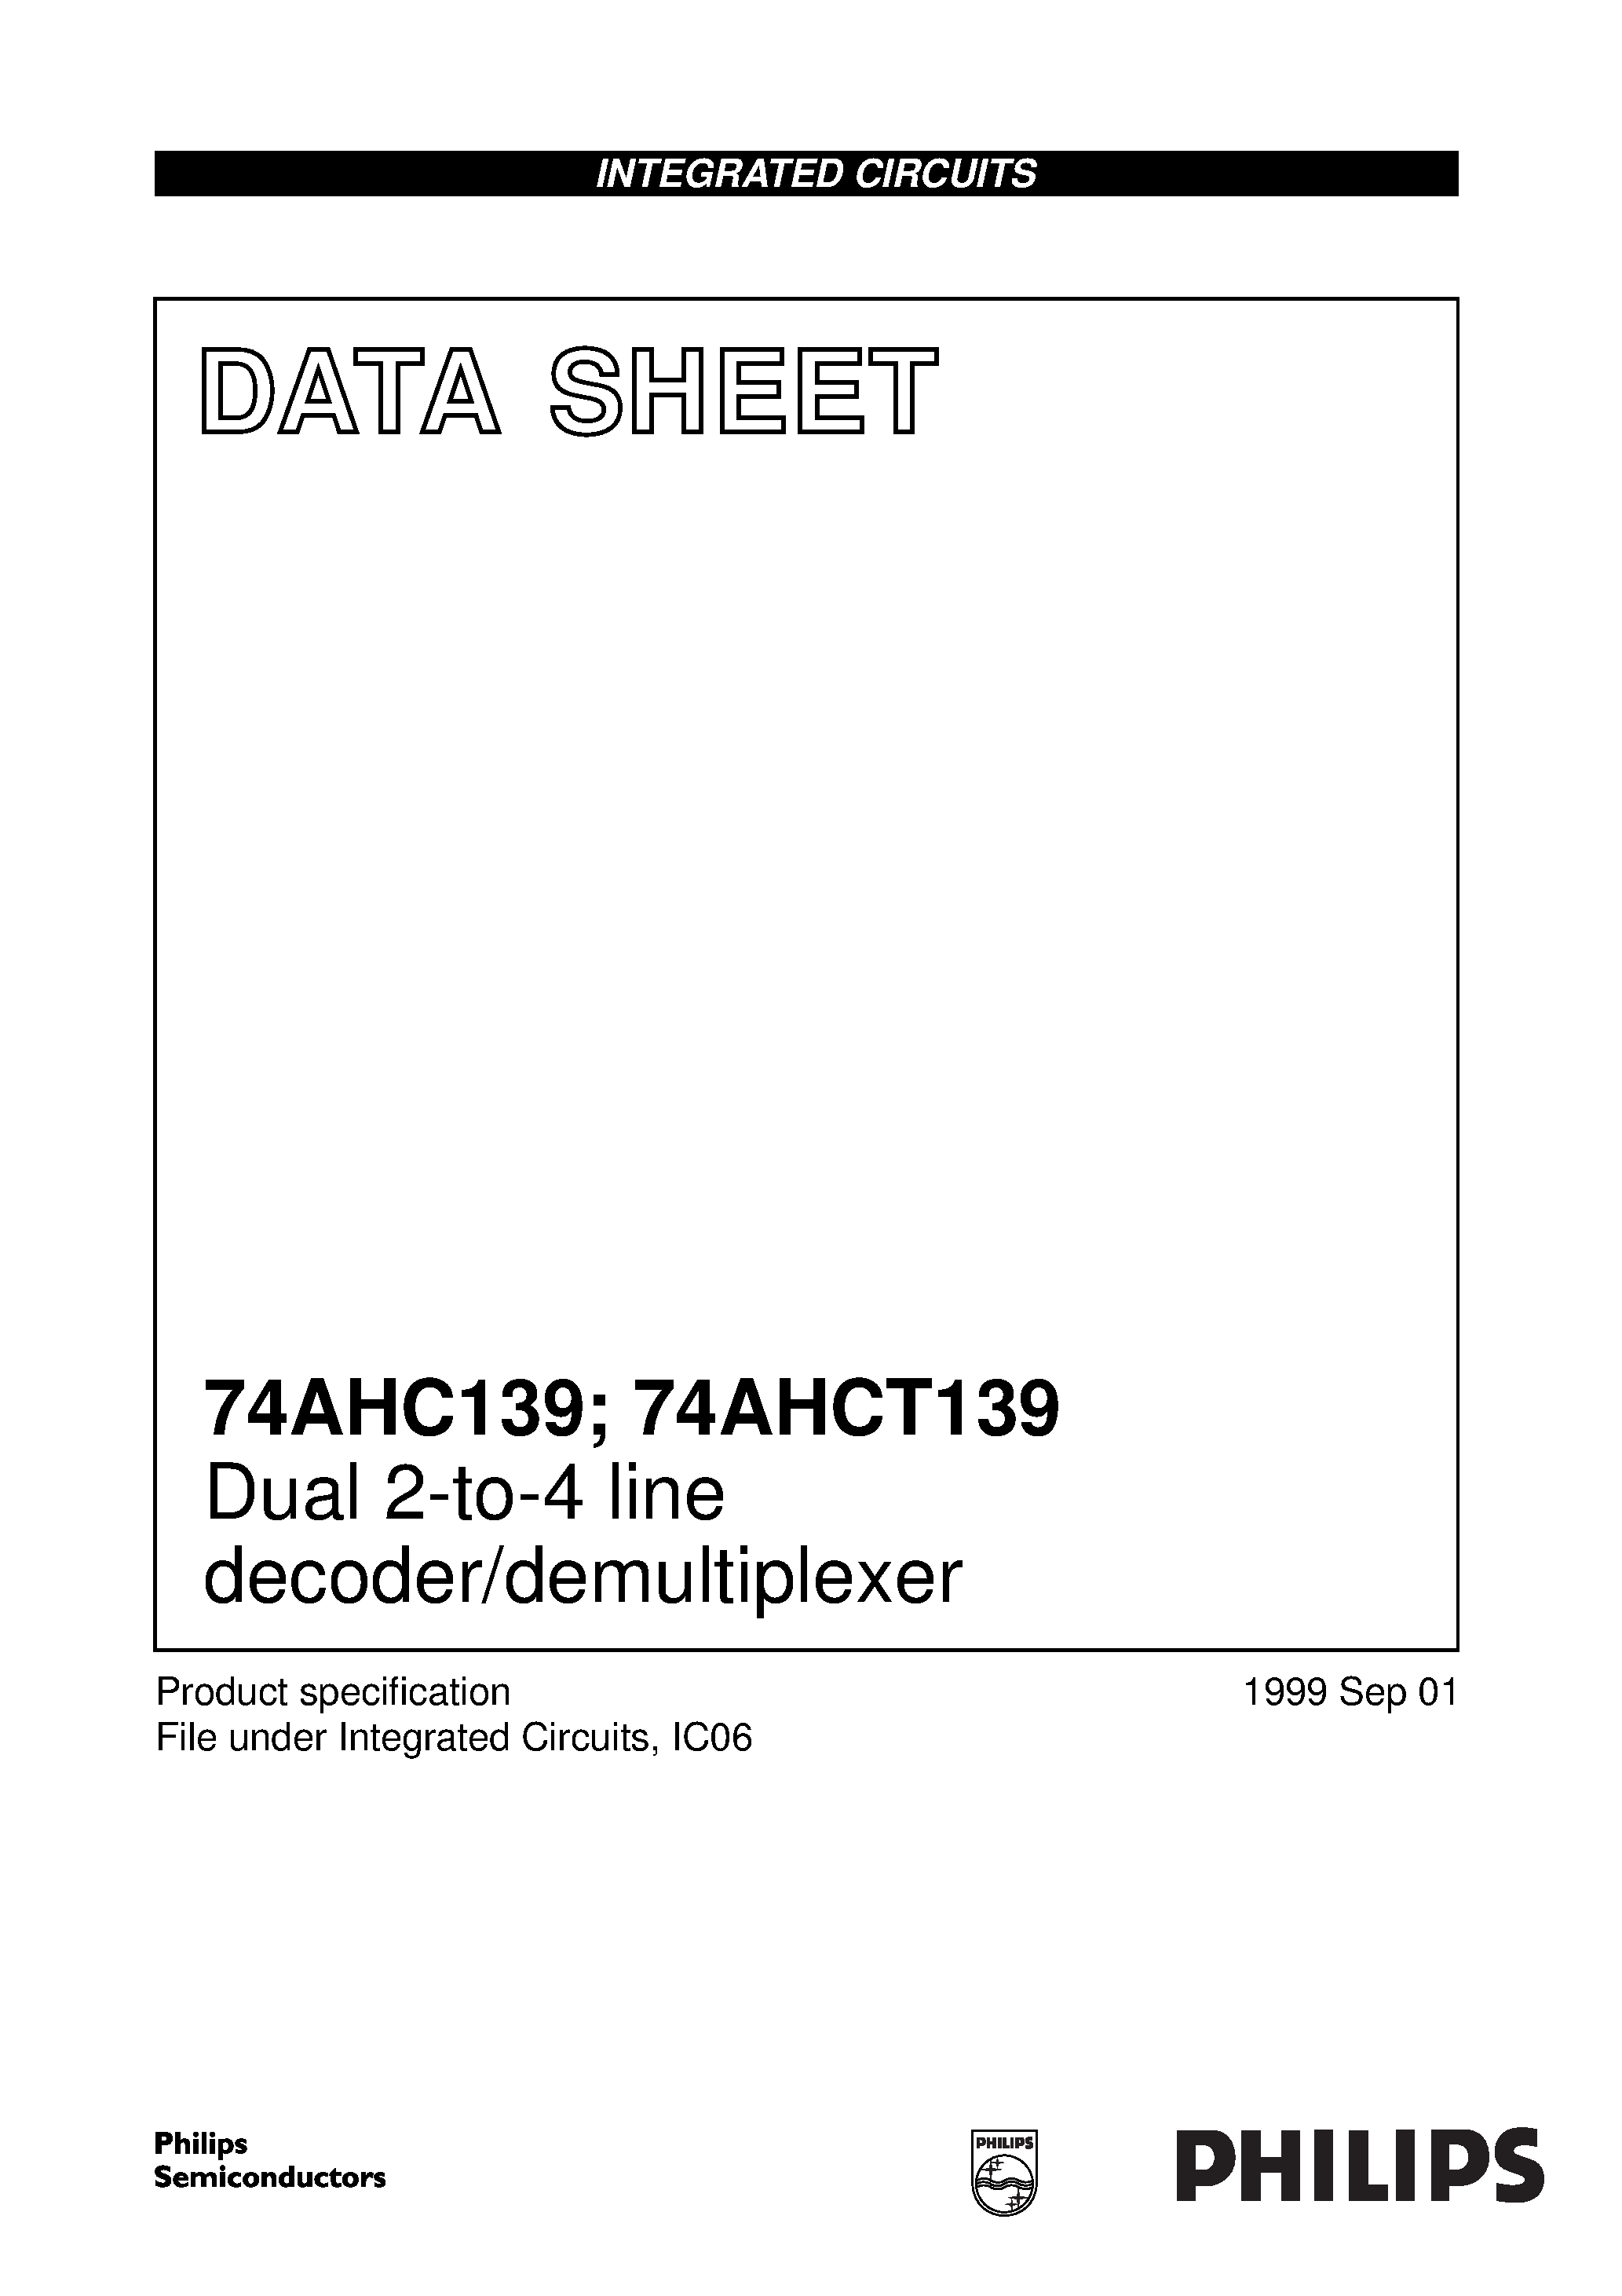 Даташит 74AHC139 - Dual 2-to-4 line decoder/demultiplexer страница 1